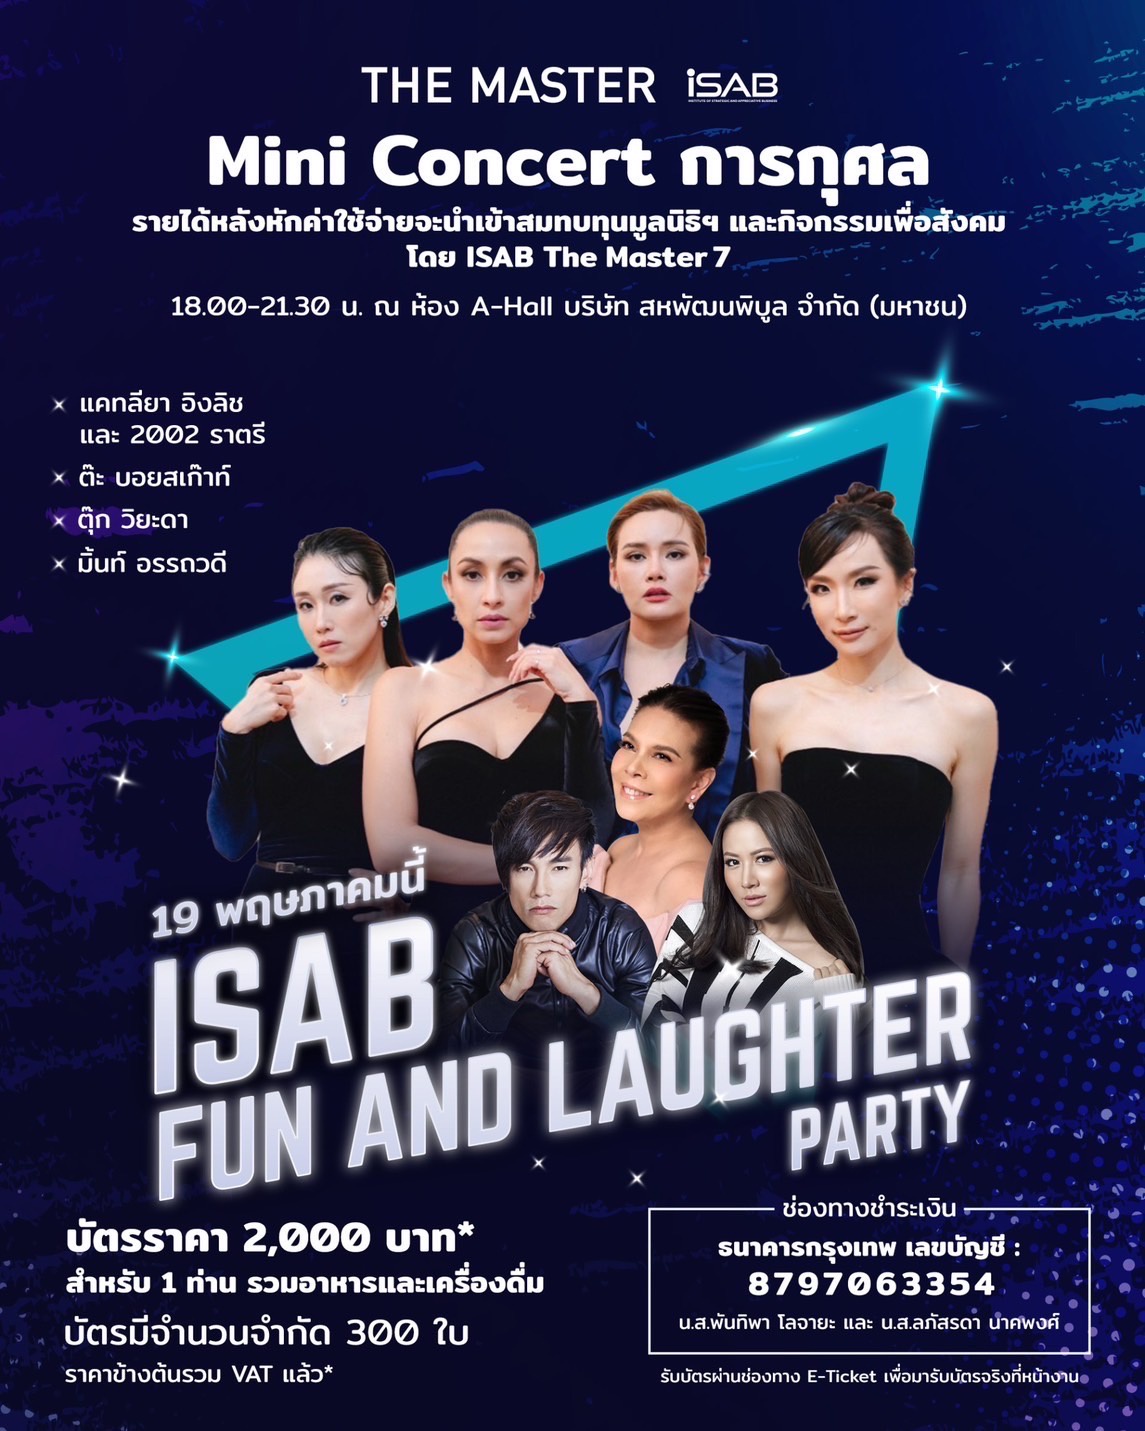 i-SAB Fun and laughter Party งานคอนเสิร์ตเพื่อการกุศล ครั้งแรกของสถาบัน i-SAB โดย The Master7